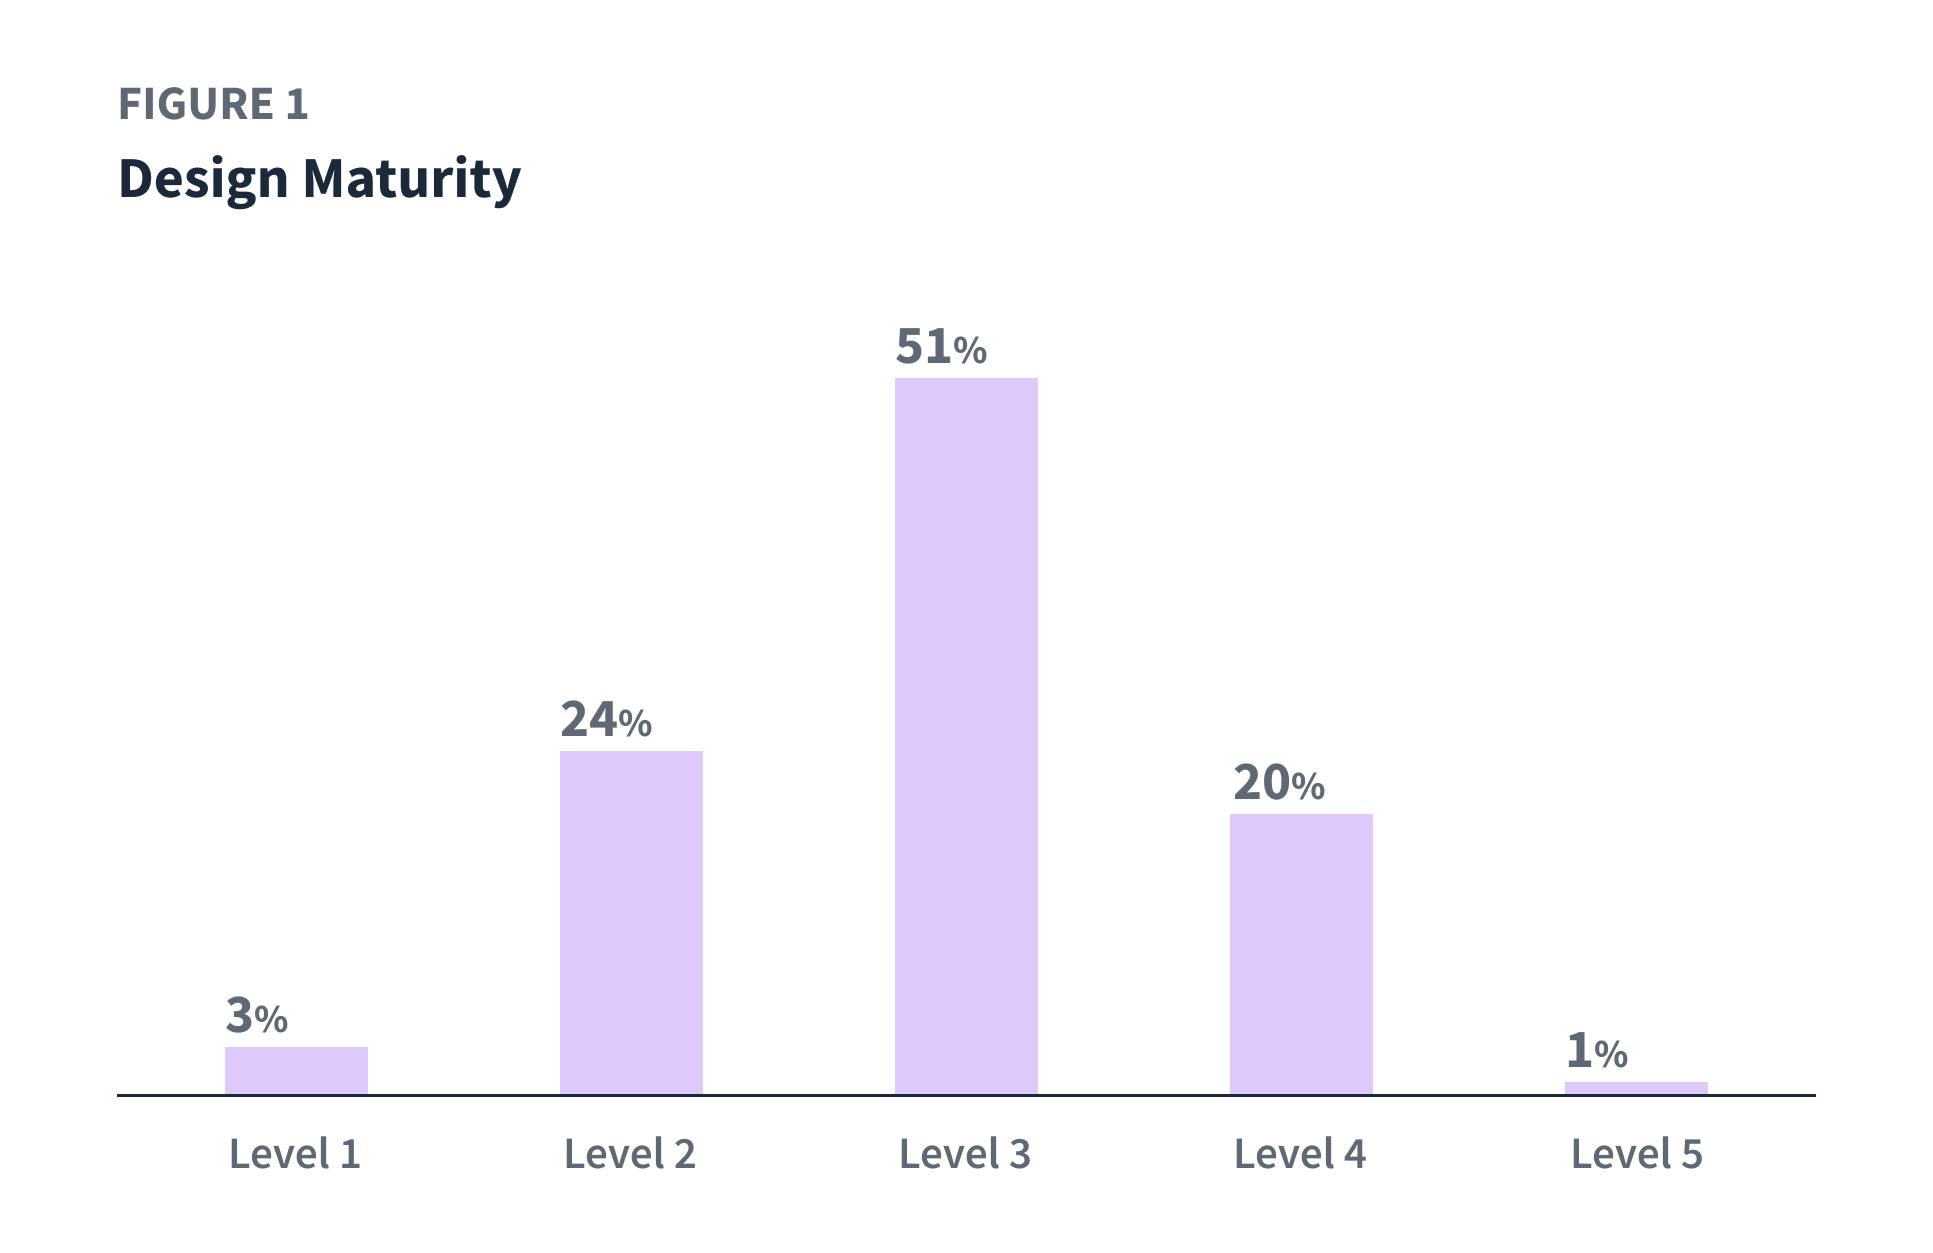 Figure 1: Design maturity. Level 1: 3%, Level 2: 24%, Level 3: 51%, Level 4: 20%, Level 5: 1%.